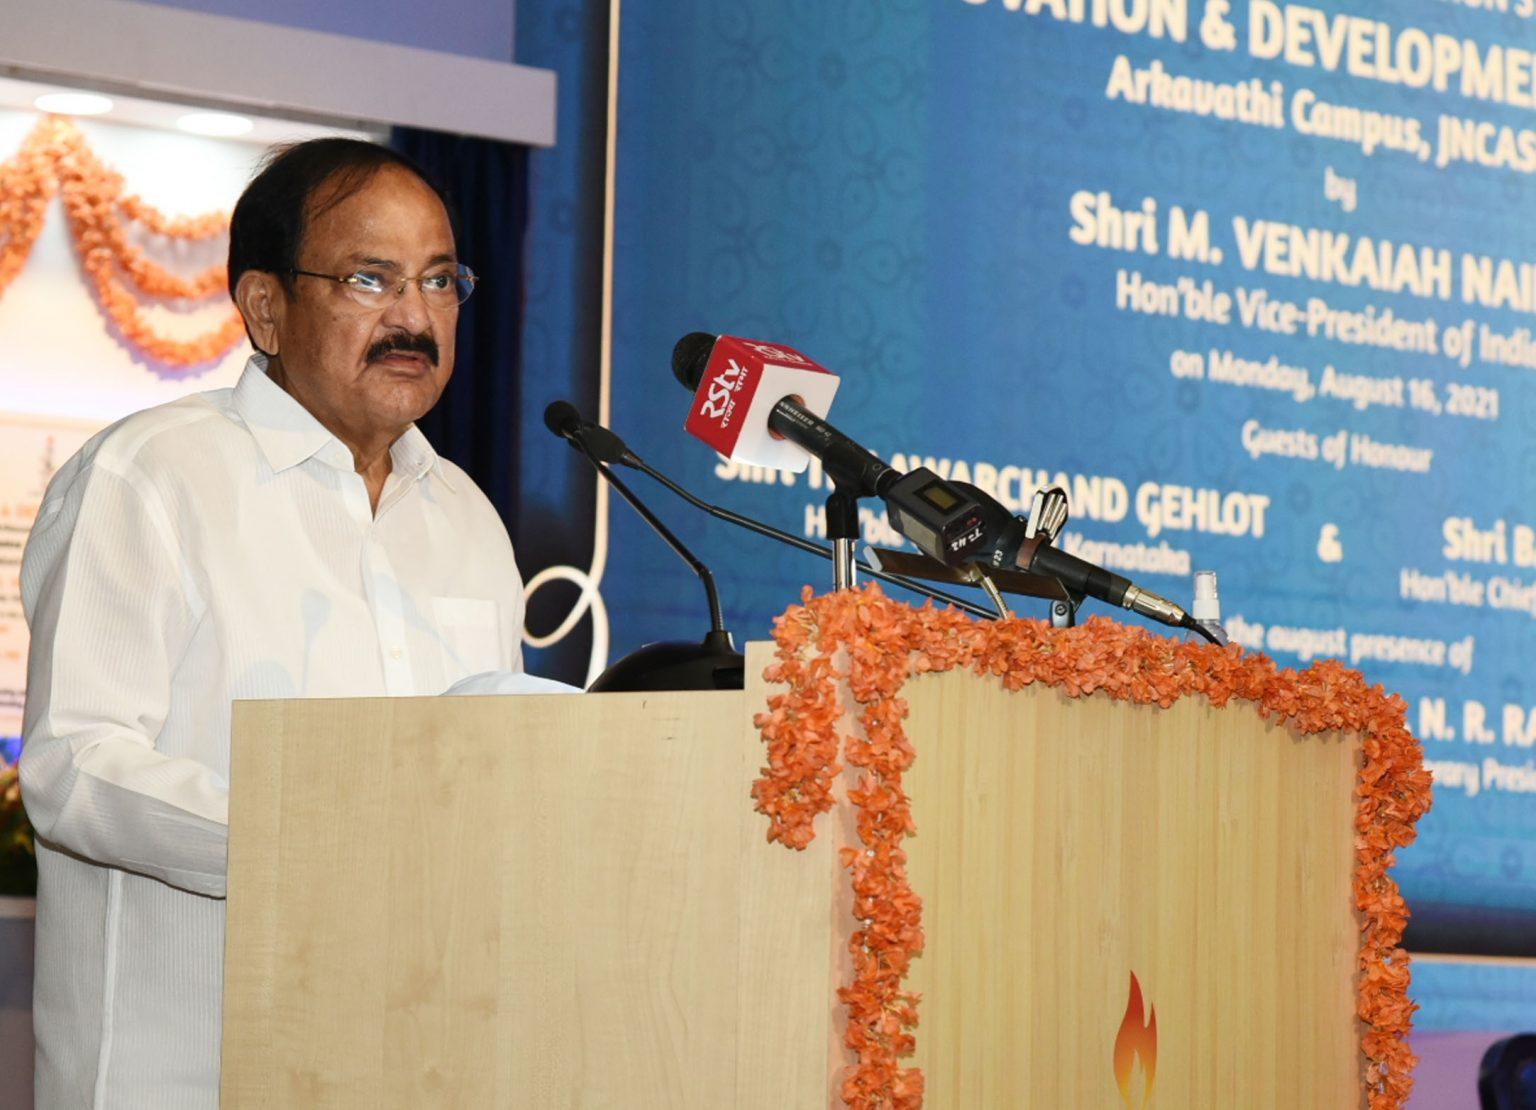 Venkaiah Naidu laid foundation stone of Innovation and Development Centre